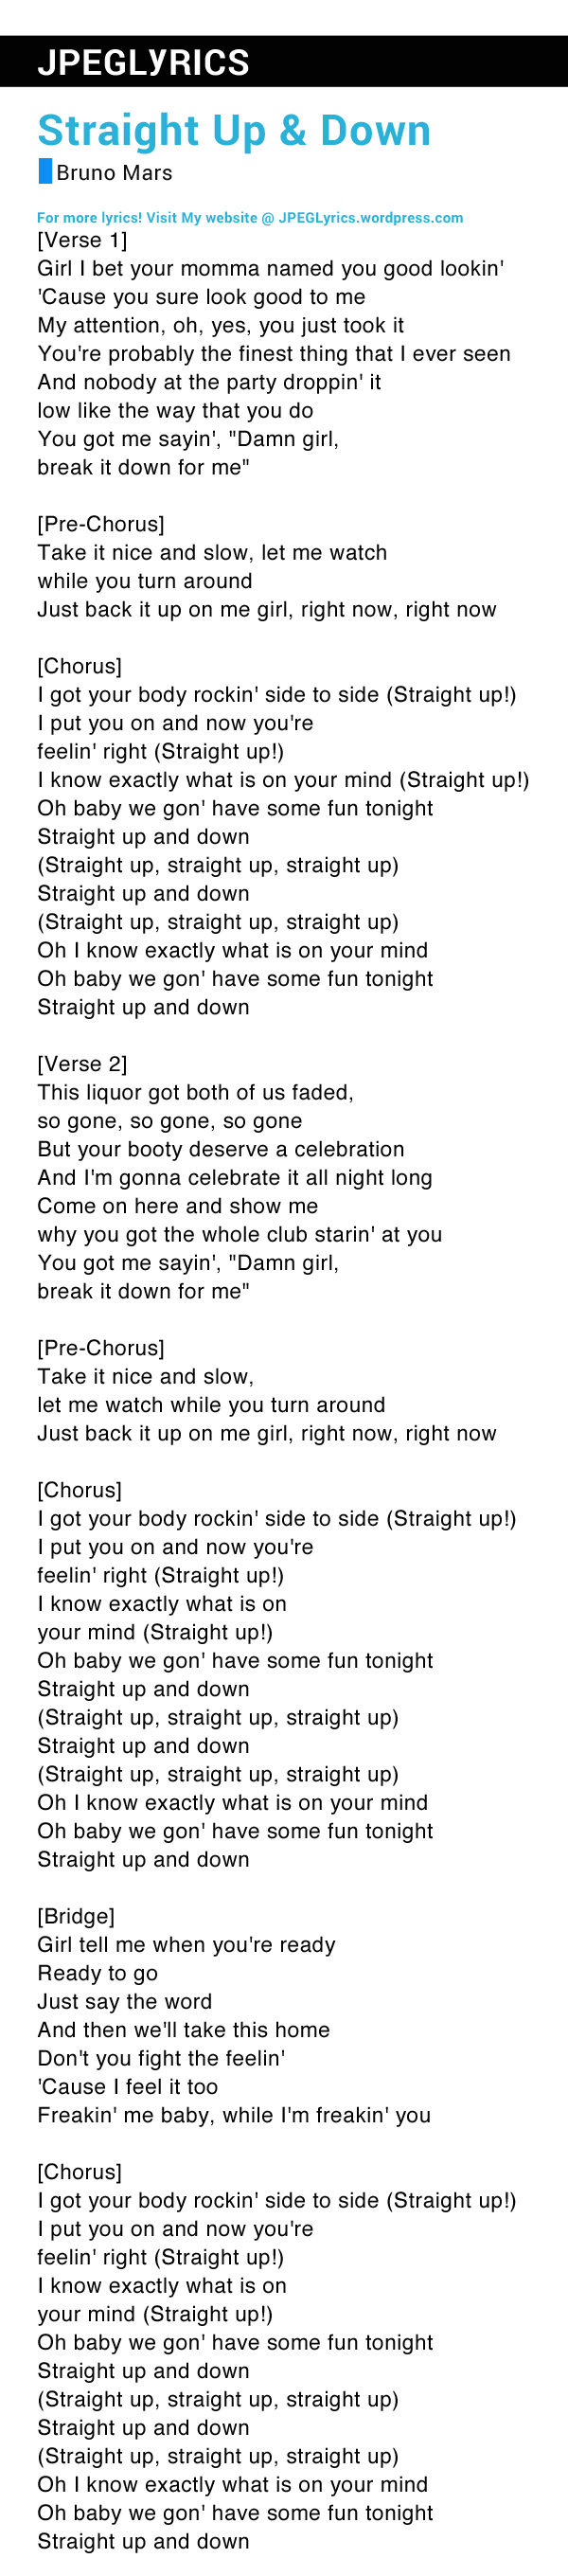 Straight Up Down By Bruno Mars Lyrics Jpeg Lyrics